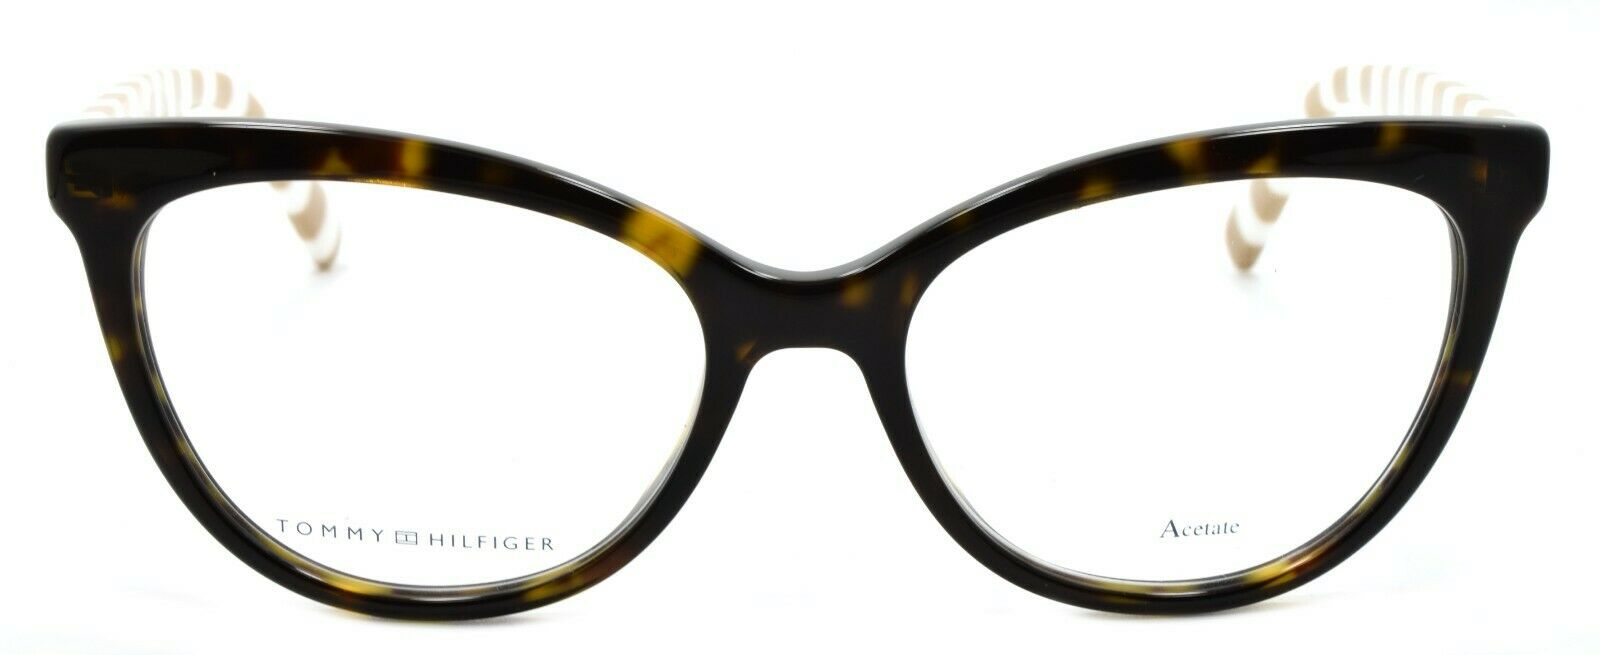 2-TOMMY HILFIGER TH 1481 9N4 Women's Eyeglasses Frames 52-17-140 Havana / Stripes-762753617576-IKSpecs